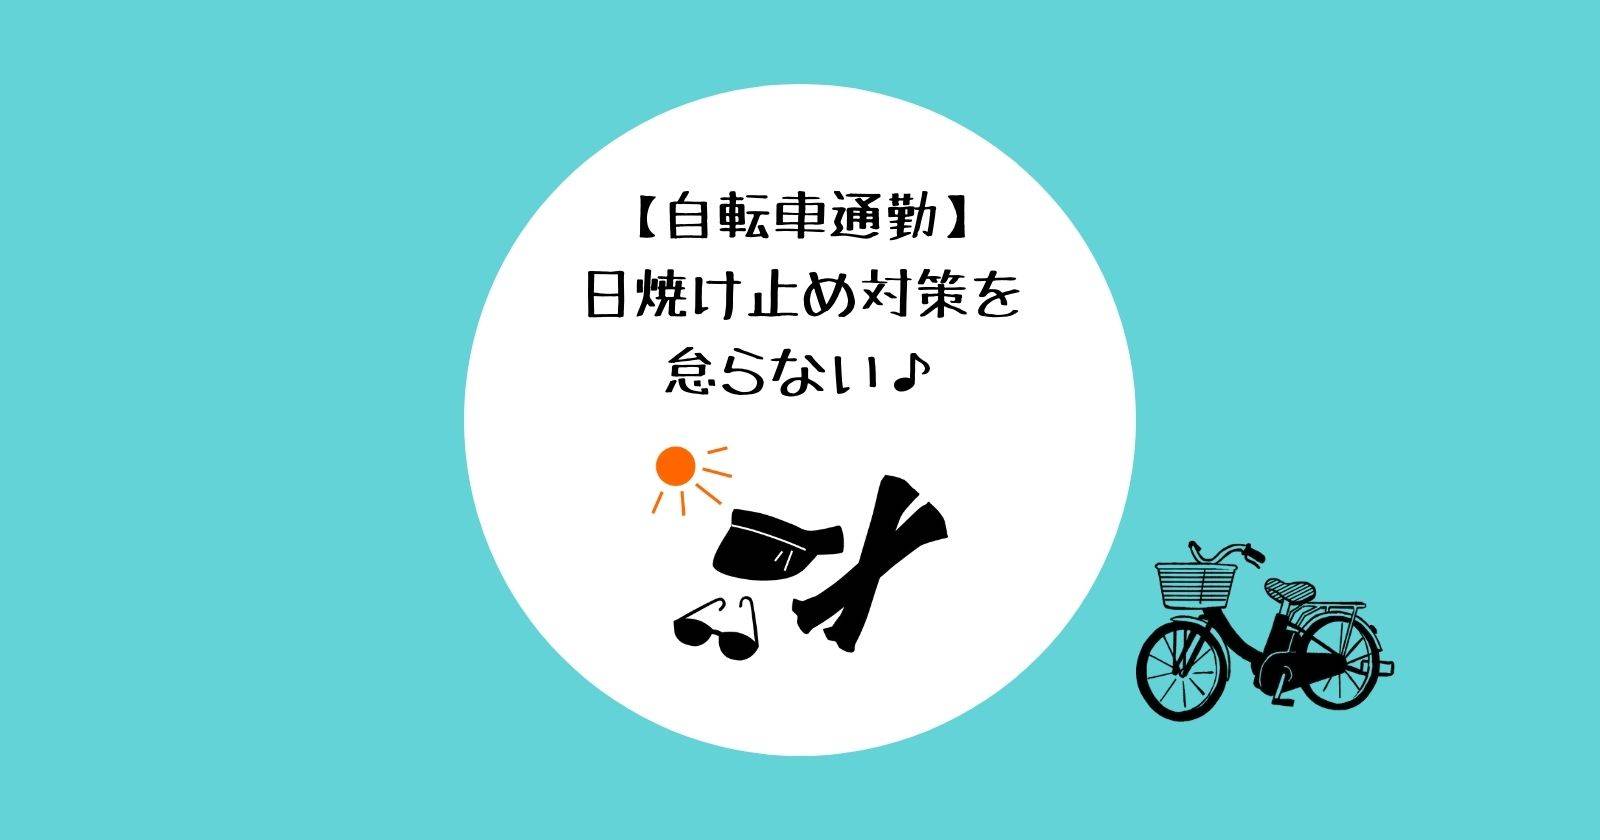 Sunscreen-bicycle